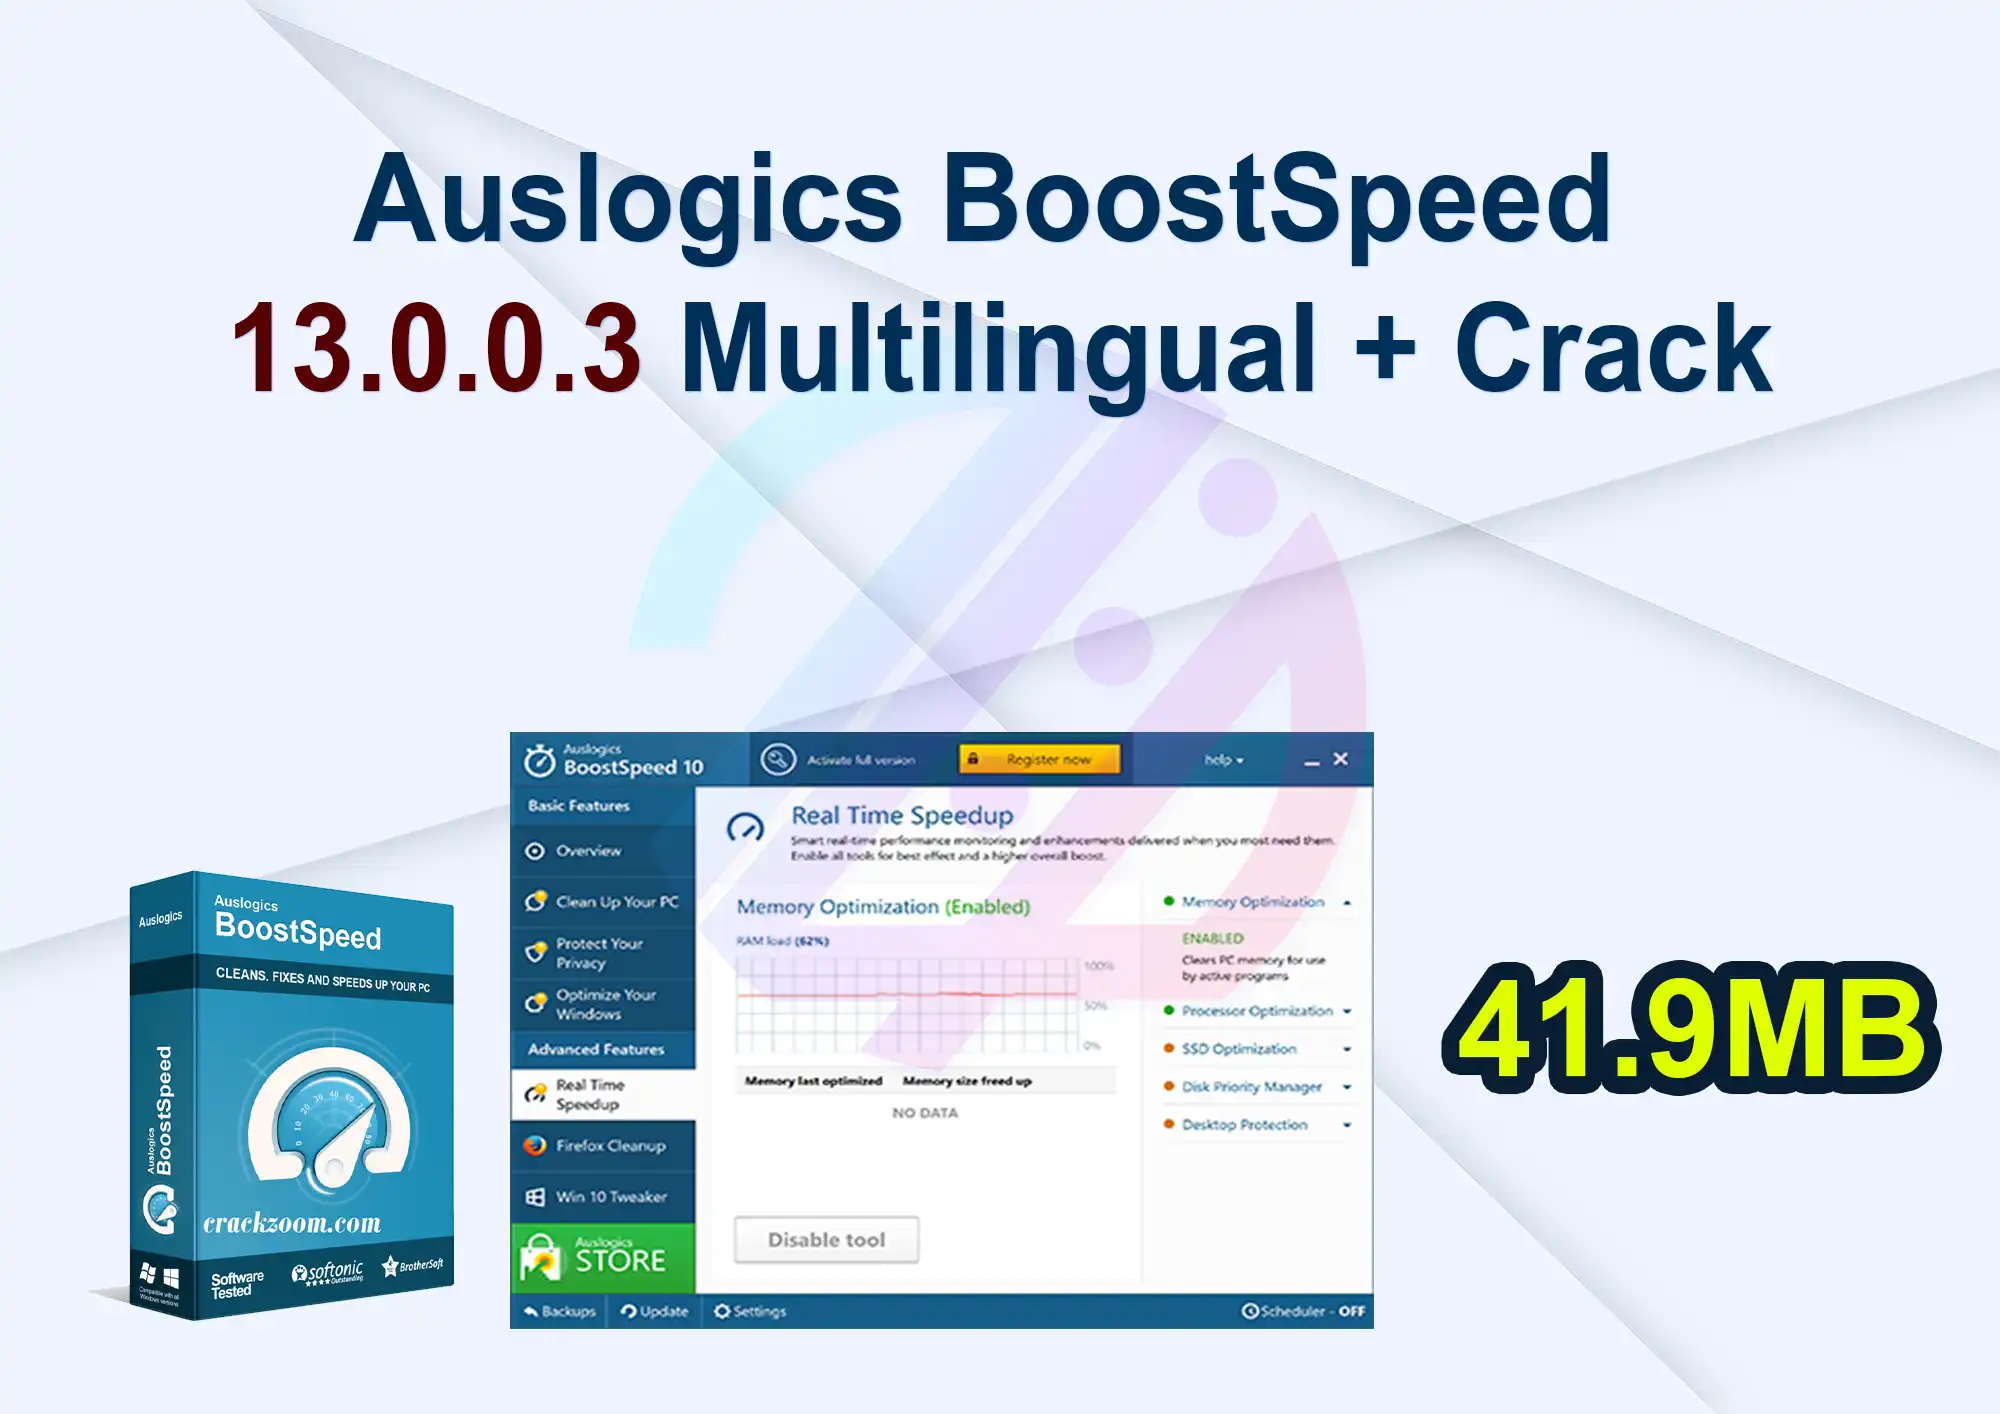 Auslogics BoostSpeed 13.0.0.3 Multilingual + Crack